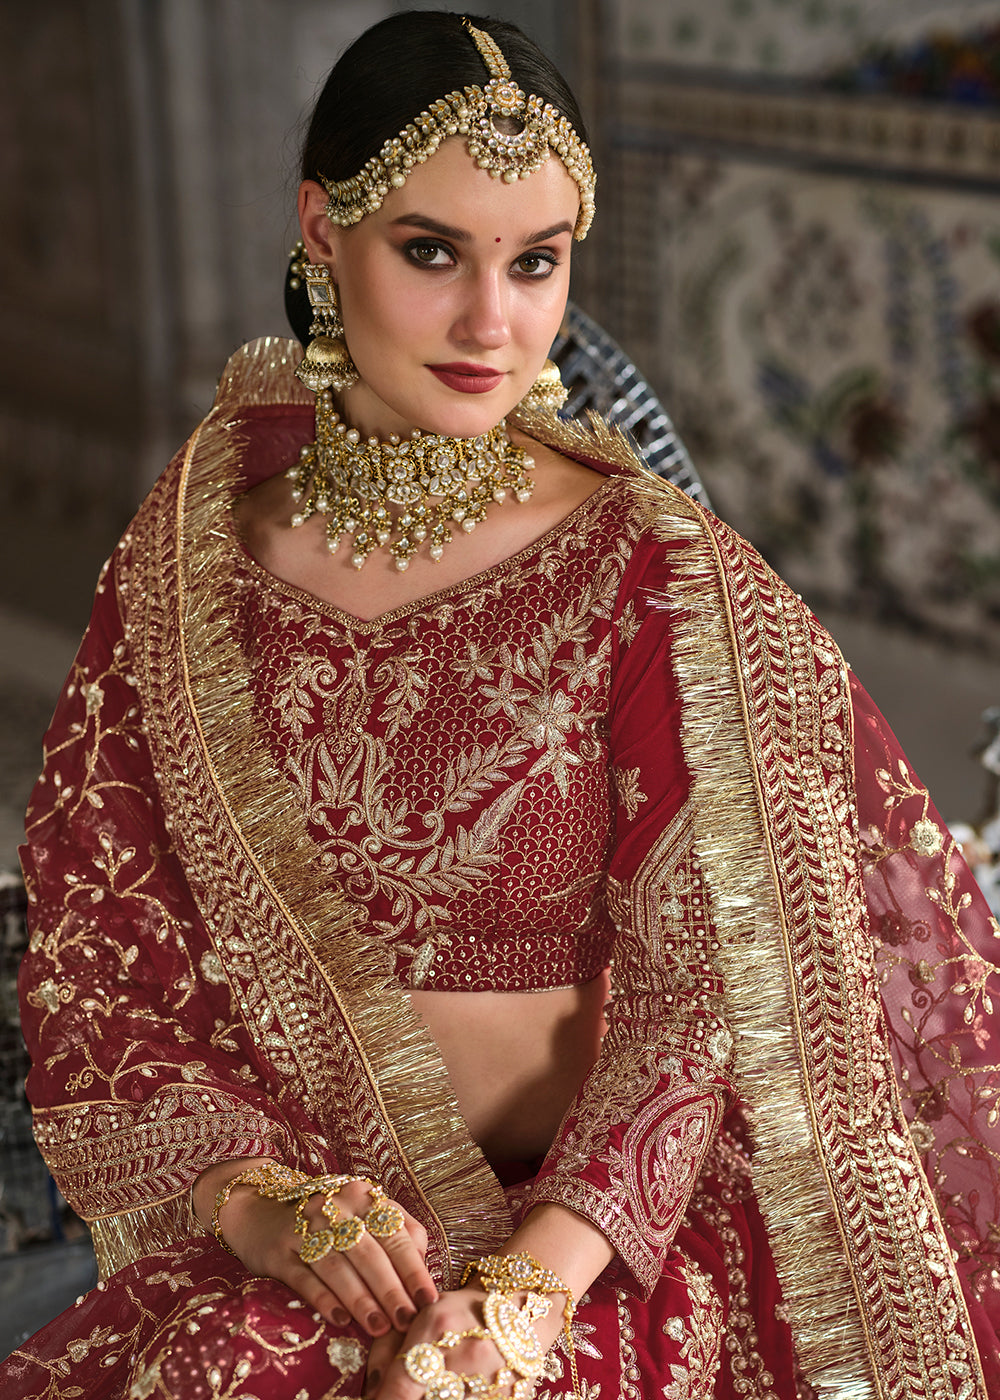 Buy Now Velvet Maroon Zarkan Embroidered Bridal Lehenga Choli Online in Canada, UK, USA & Worldwide at Empress Clothing.